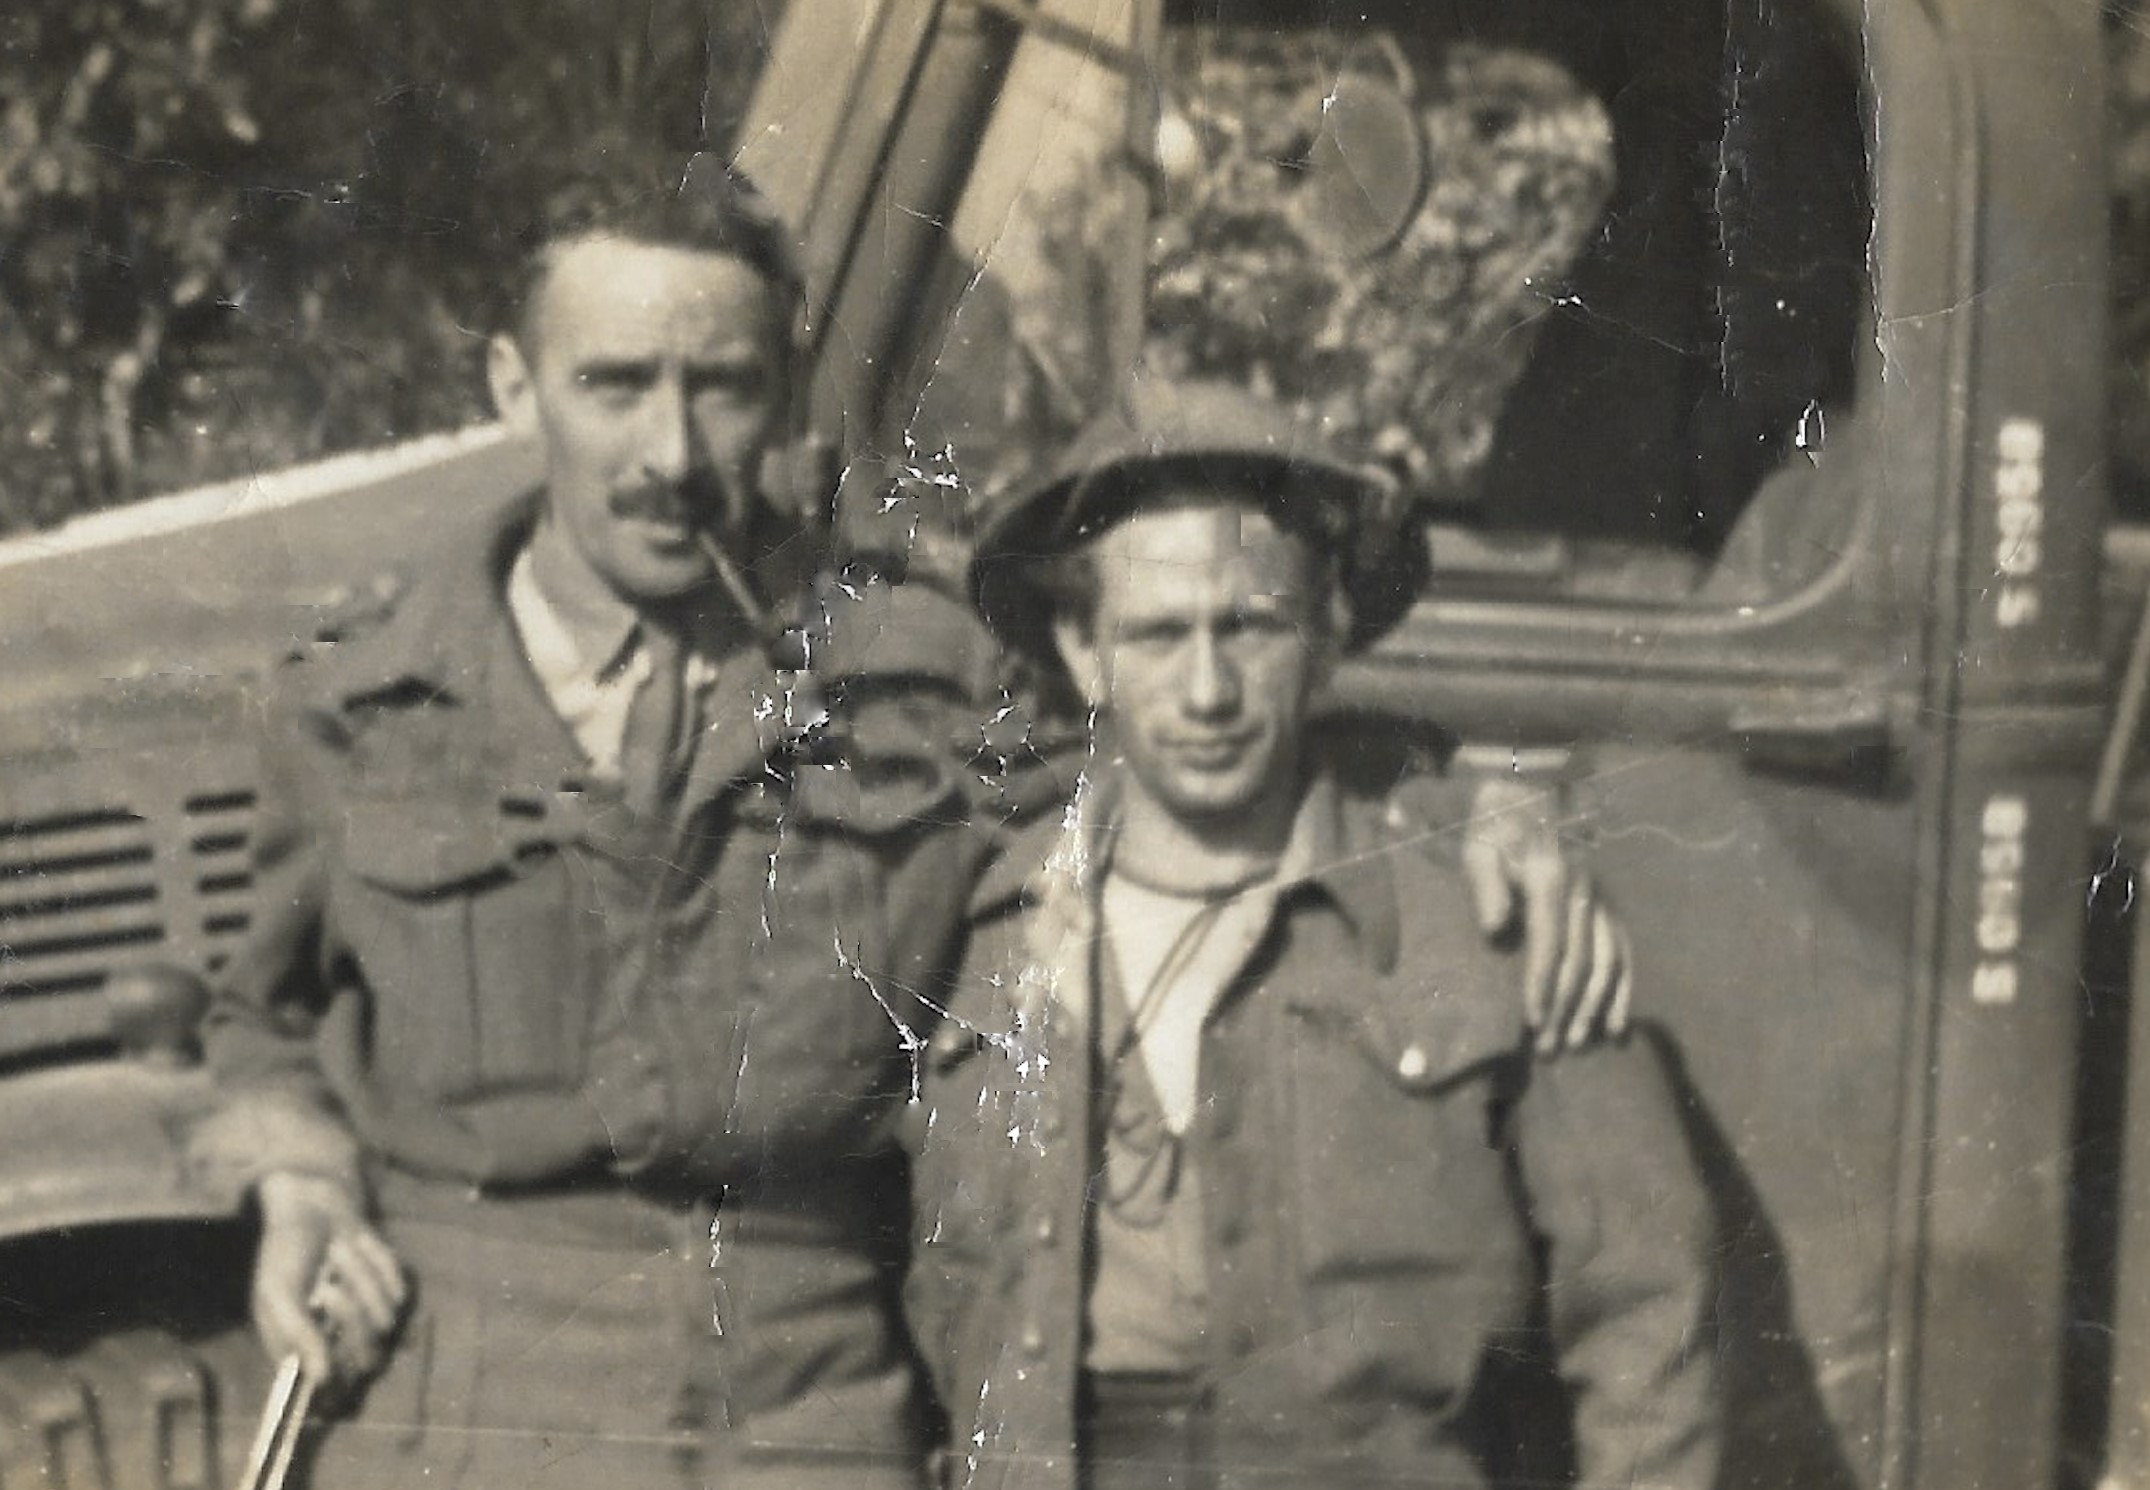 Edward Fingland and Friend in Army